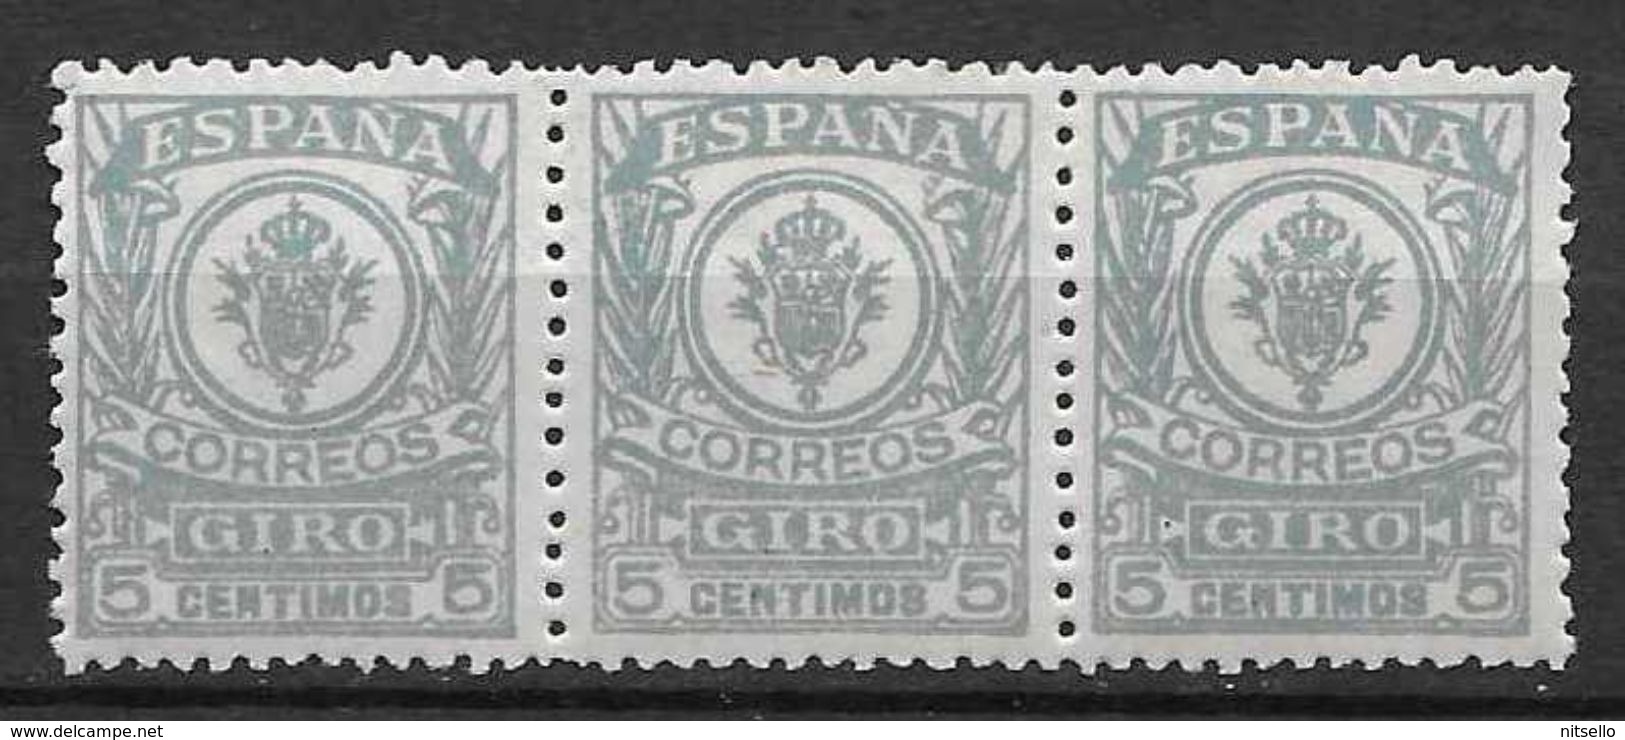 LOTE 1891 D  ///  (C025) ESPAÑA GIRO  EDIFIL Nº 1  BLOQ 3 **MNH - Steuermarken